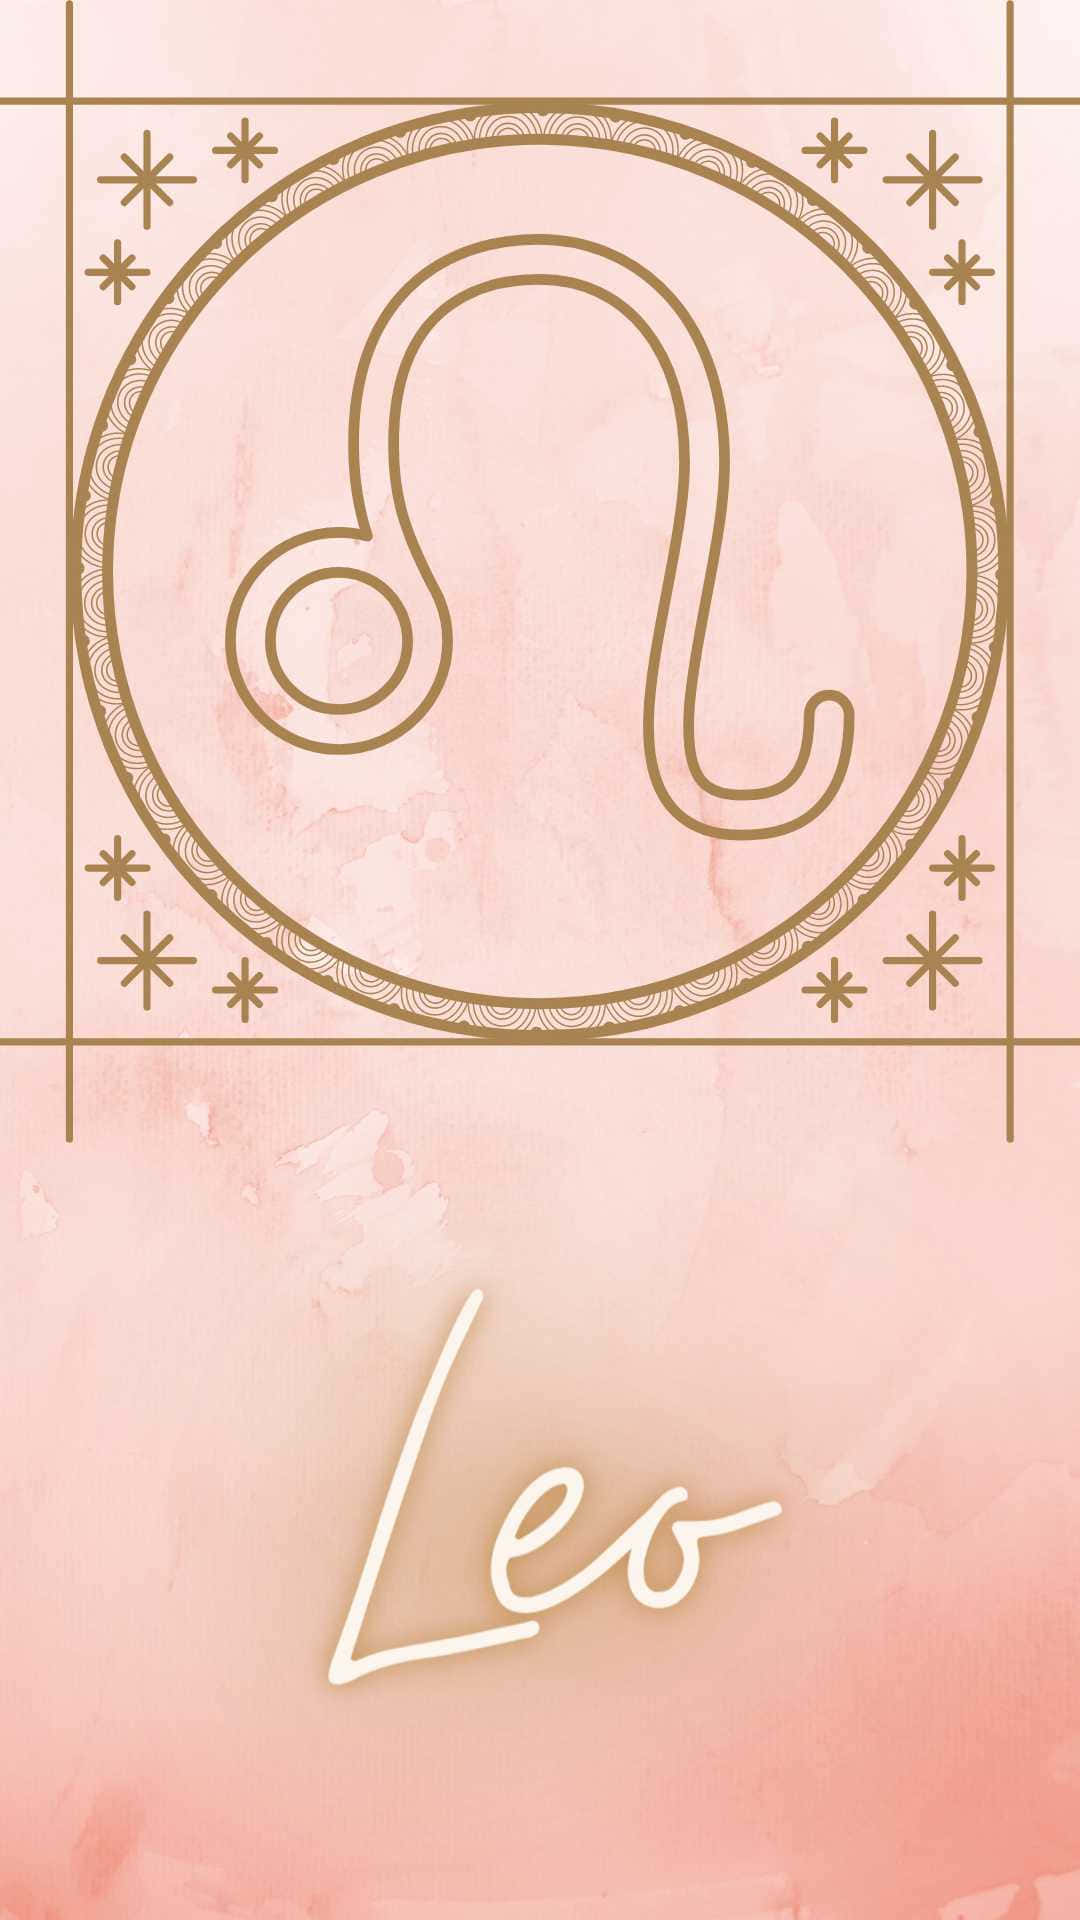 Leo Zodiac Sign On A Pink Background